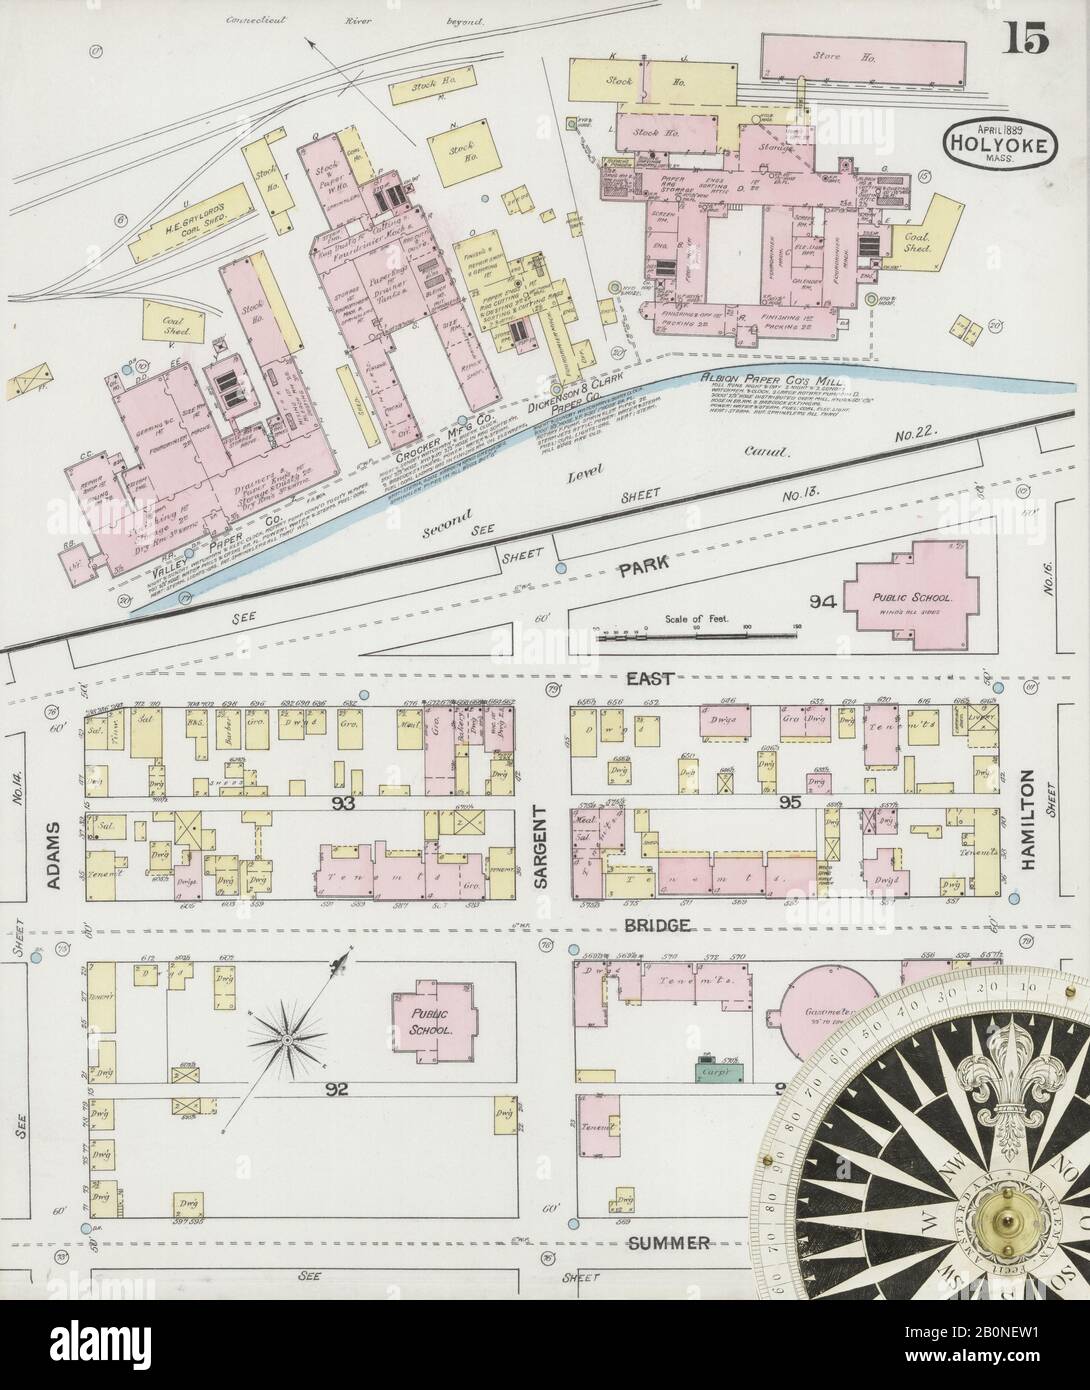 Bild 15 von Sanborn Fire Insurance Map aus Holyoke, Hampden County, Massachusetts. Apr. 30 Blatt(e), Amerika, Straßenkarte mit einem Kompass Aus Dem 19. Jahrhundert Stockfoto